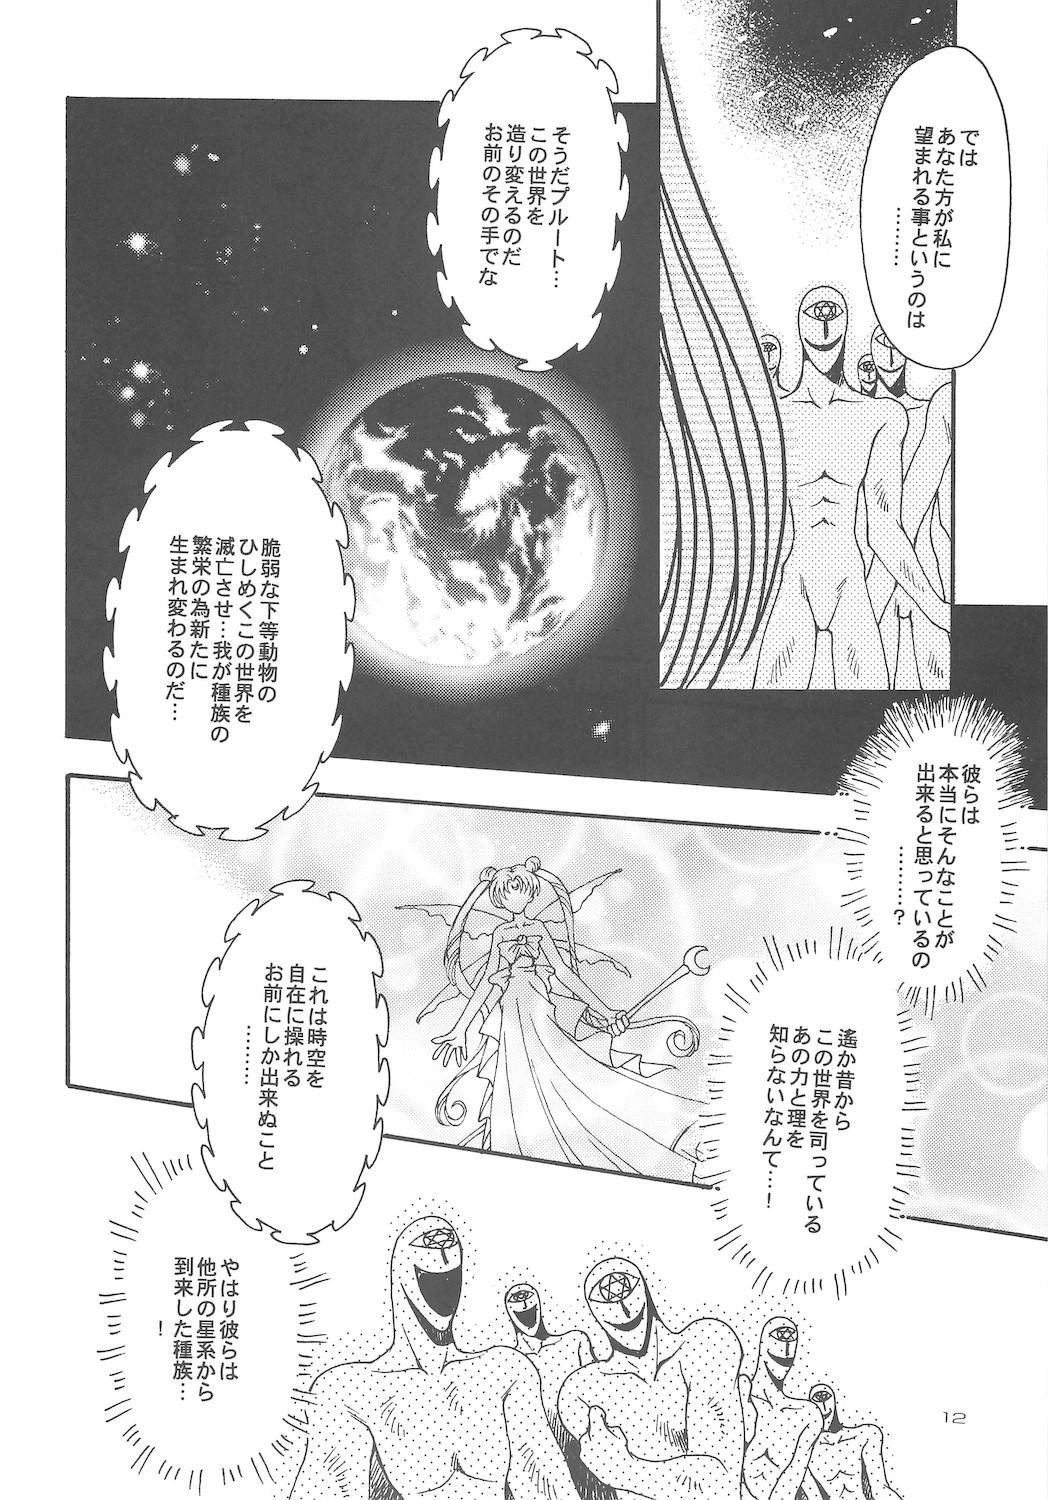 Spread Owaru Sekai dai 4 shou - Sailor moon Studs - Page 12